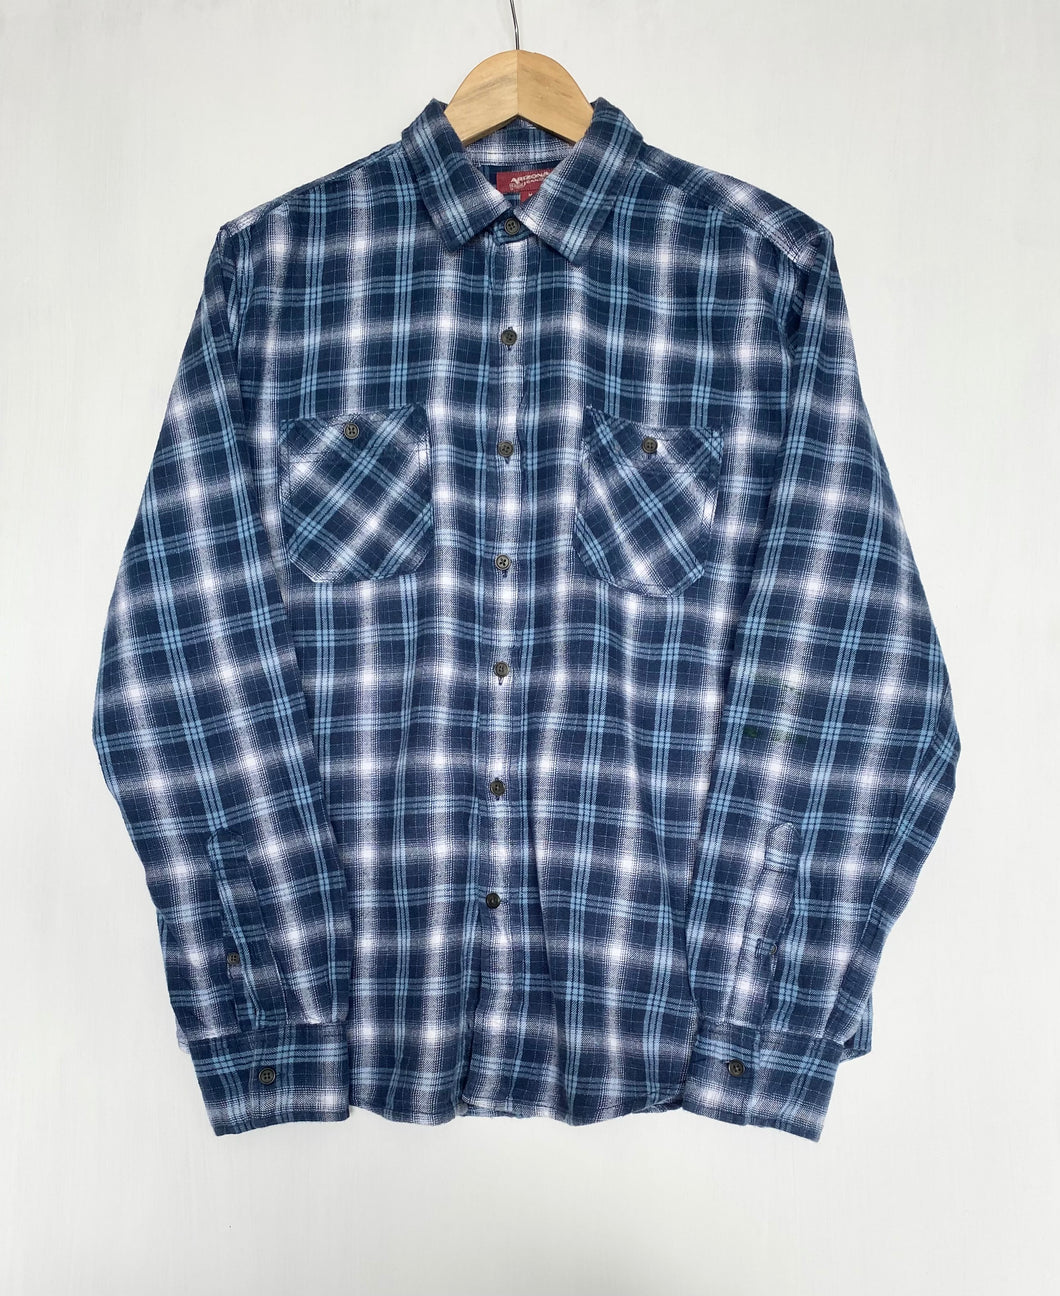 Flannel shirt (M)